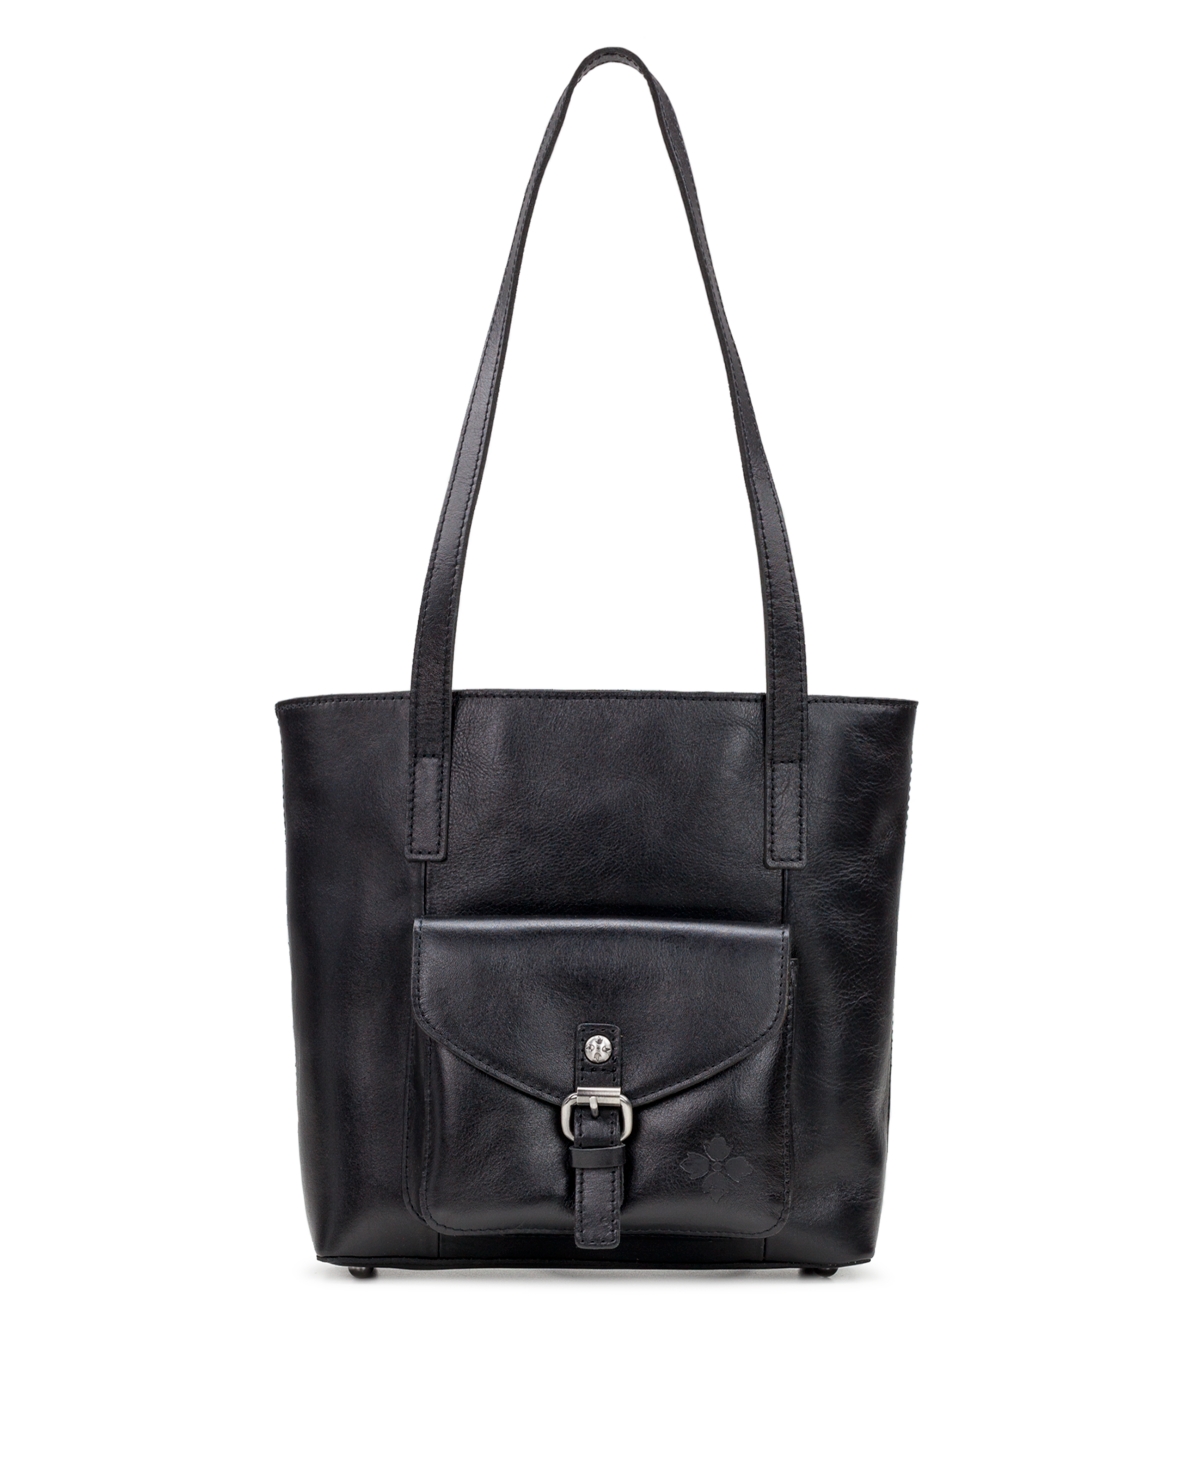 Women's Banbury Tote Bag, Created for Macy's - Black